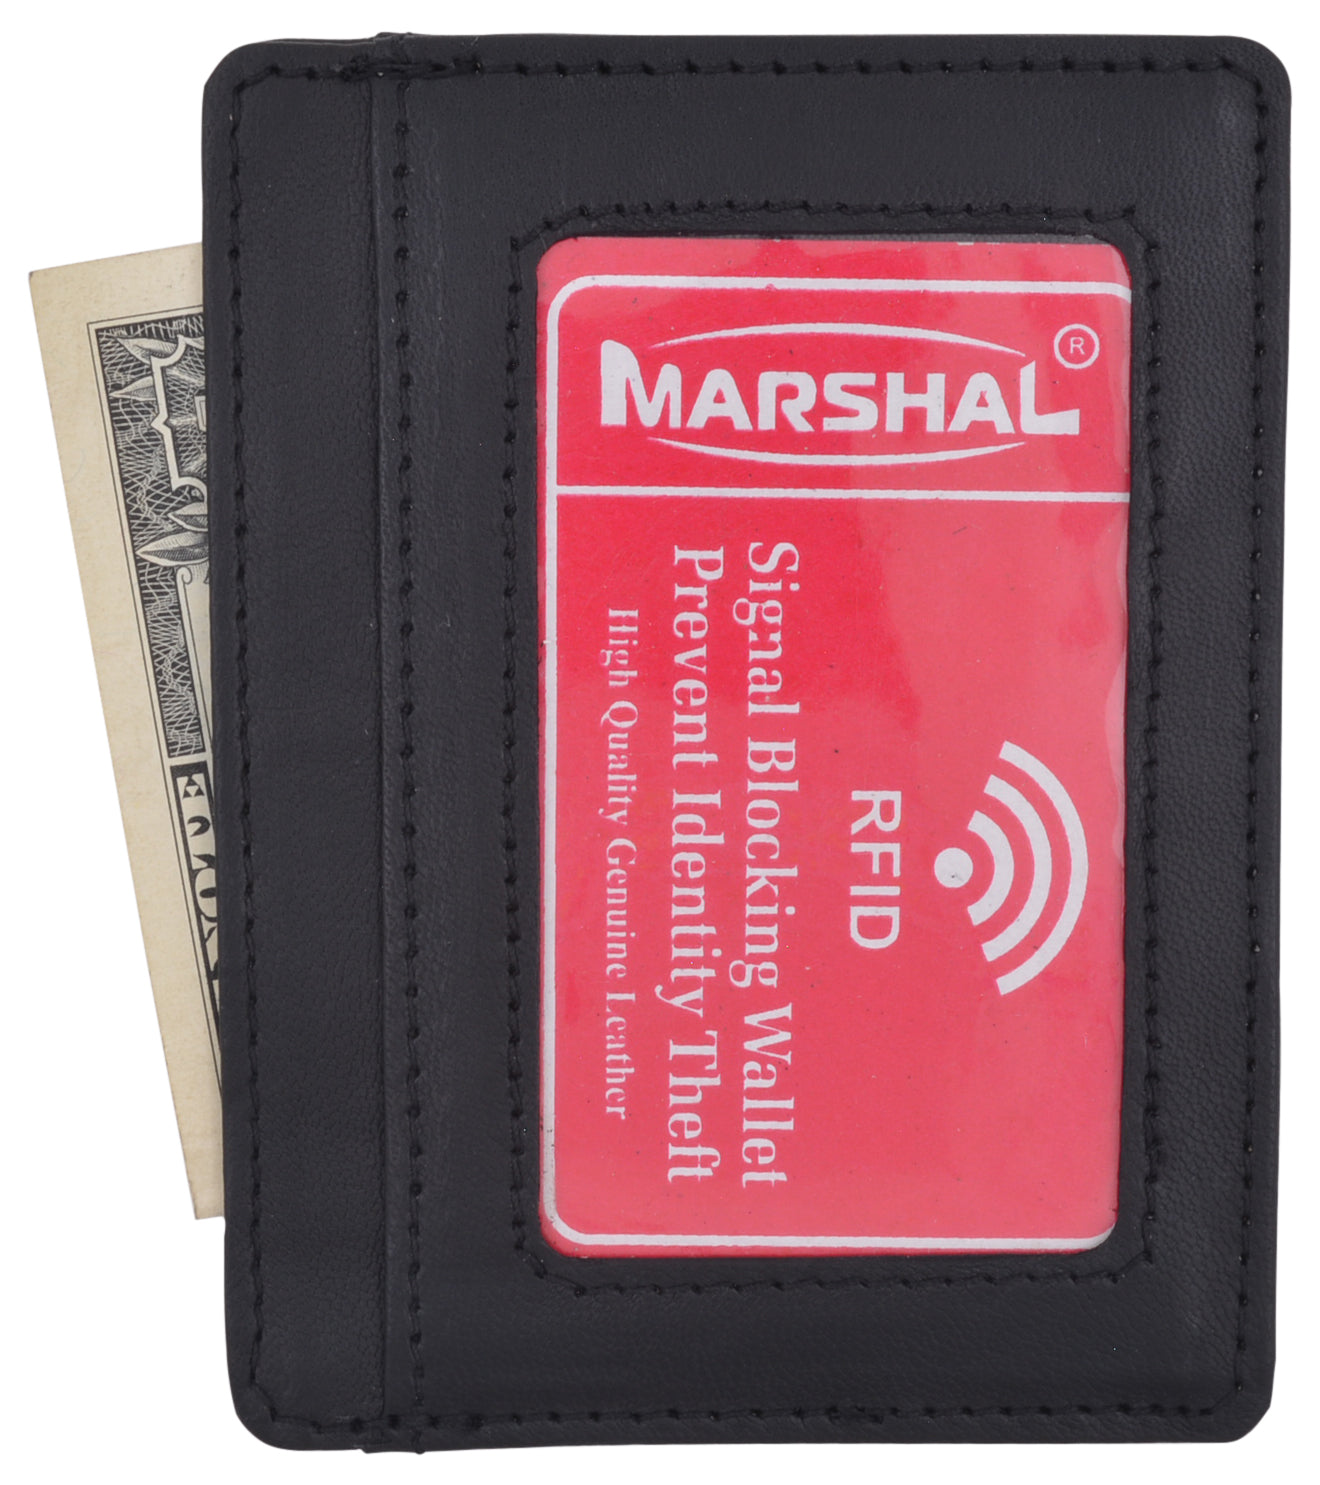 Slim Minimalist Wallets For Men & Women - Genuine Leather Credit Card  Holder Front Pocket RFID Blocking Wallet With Gift Box 